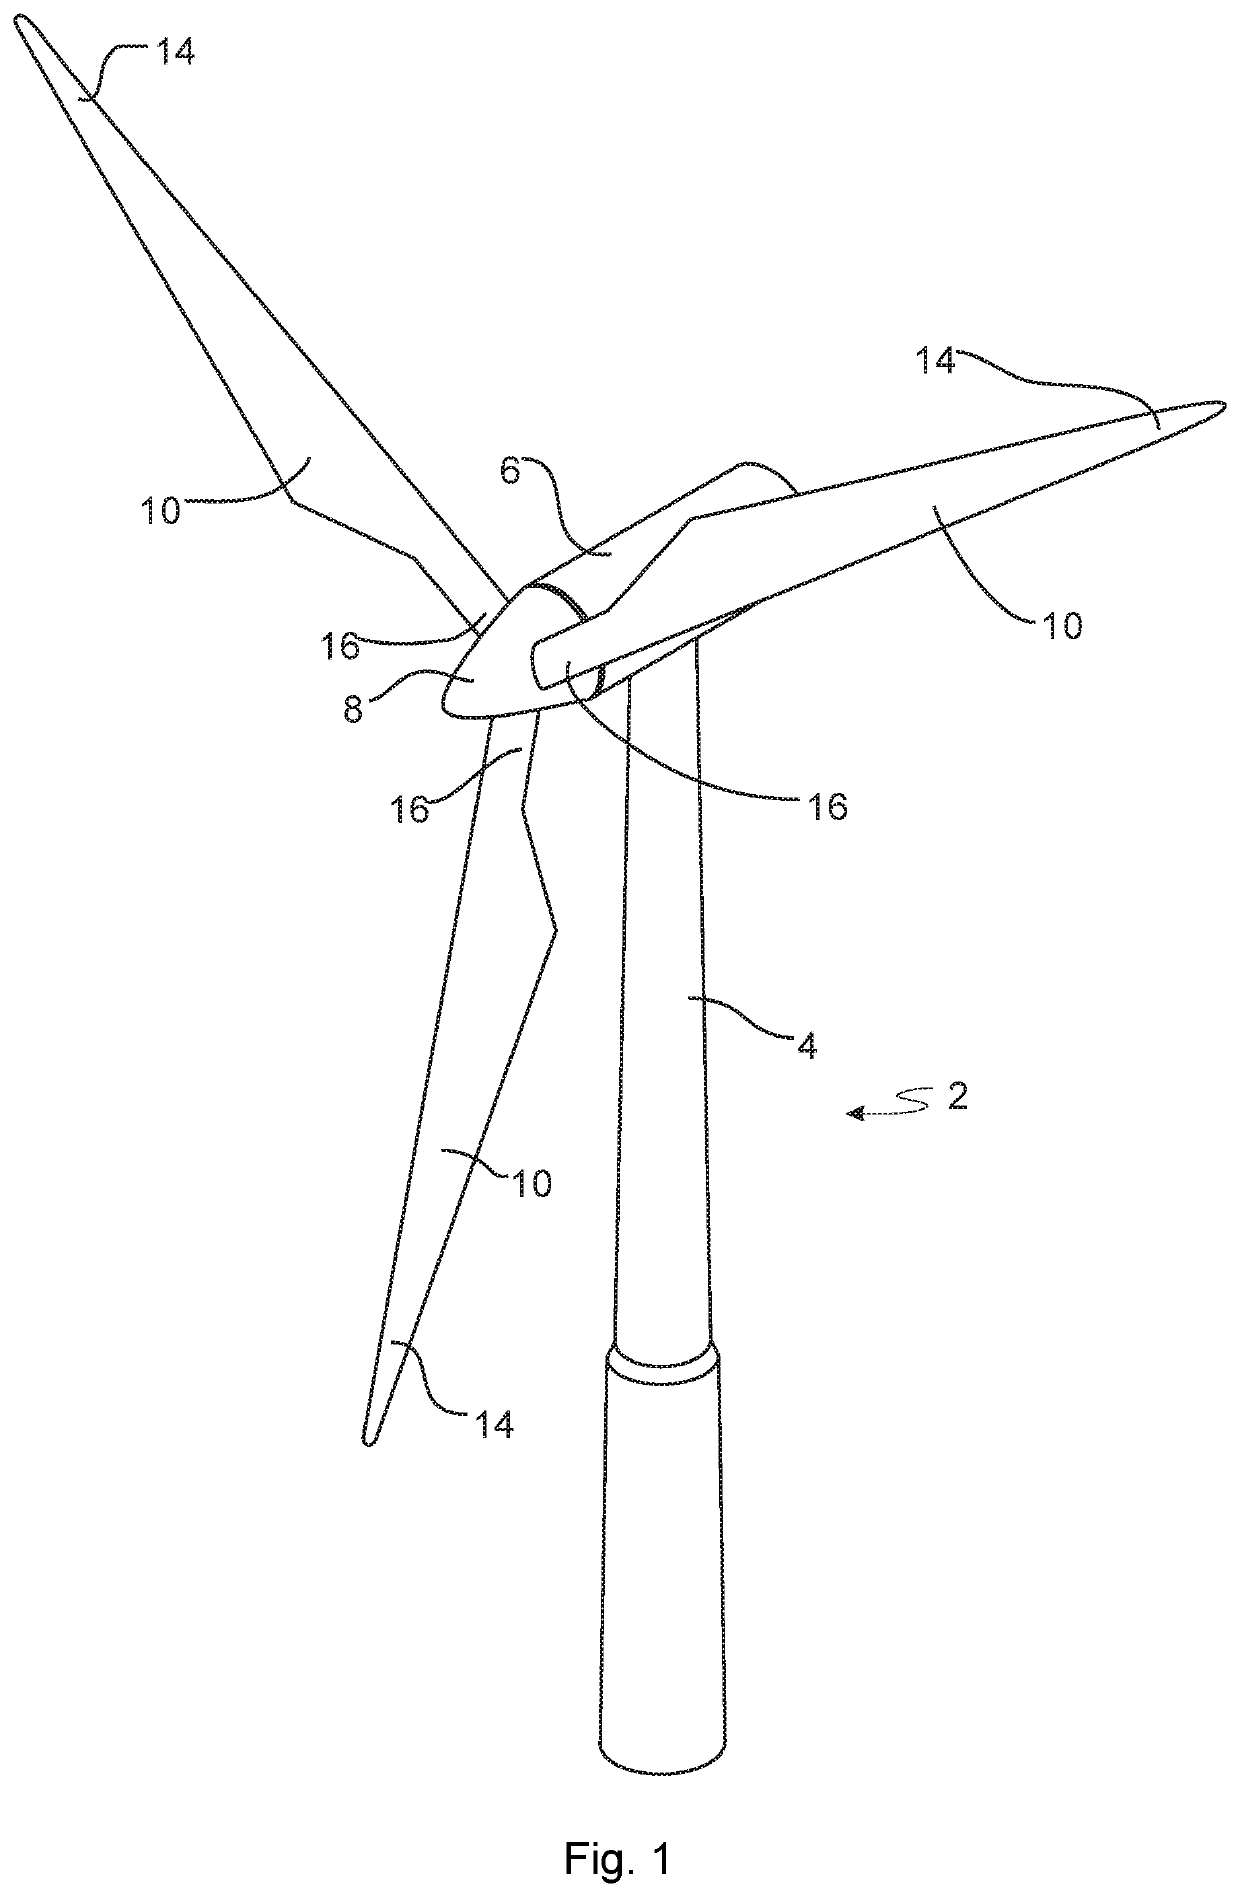 Wind turbine blade lightning protection system